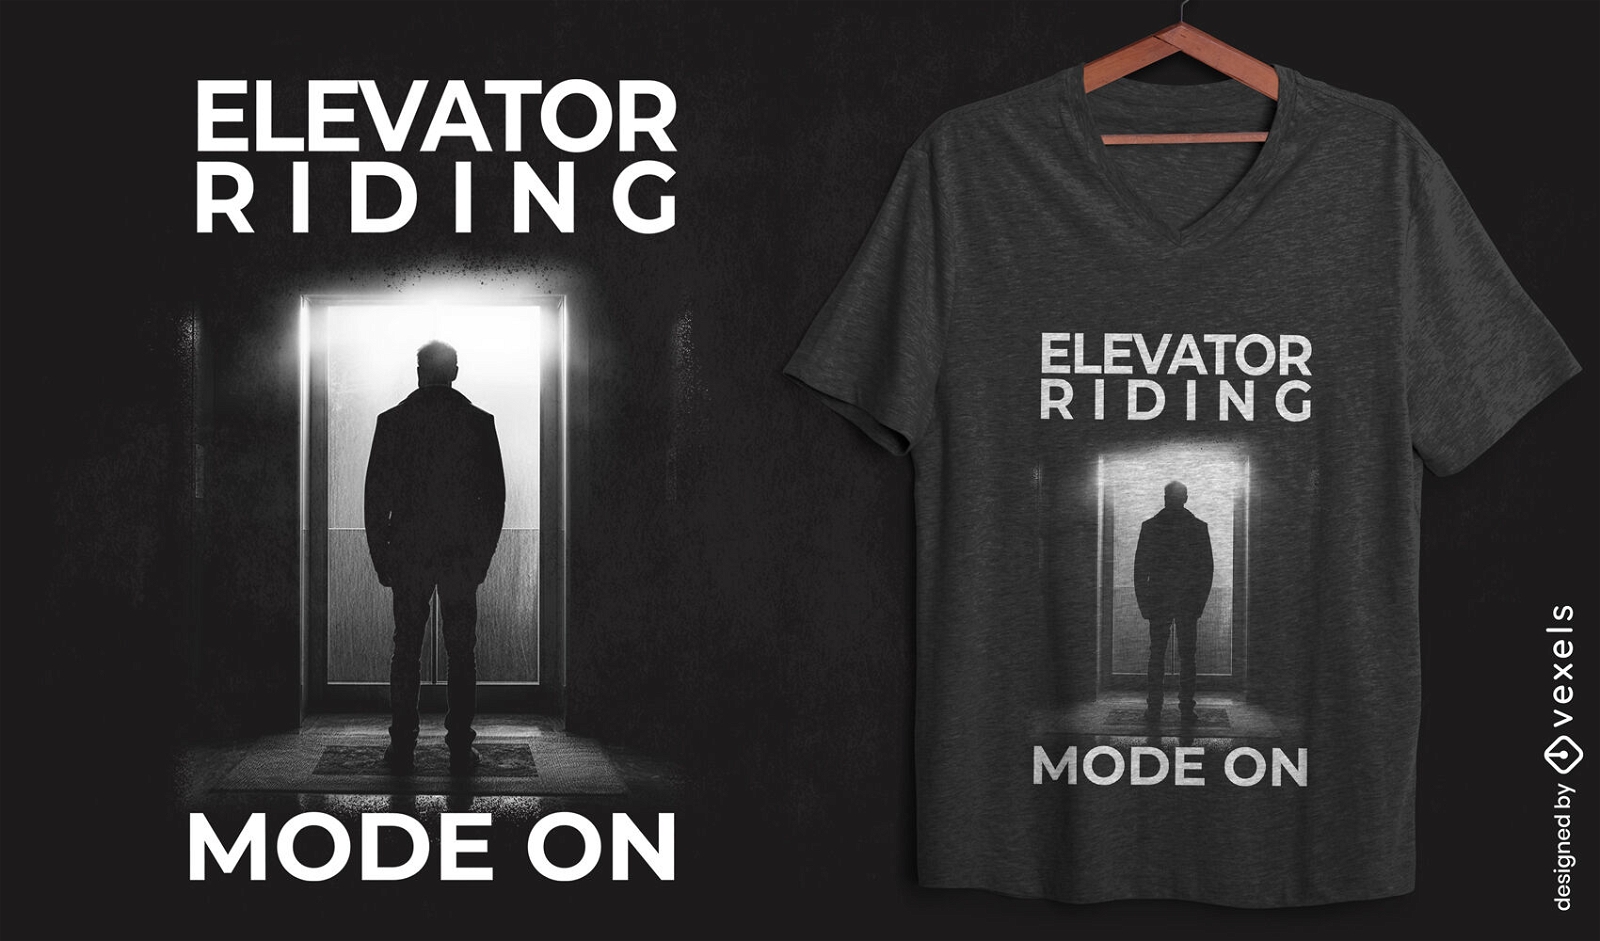 Elevator solitude t-shirt design